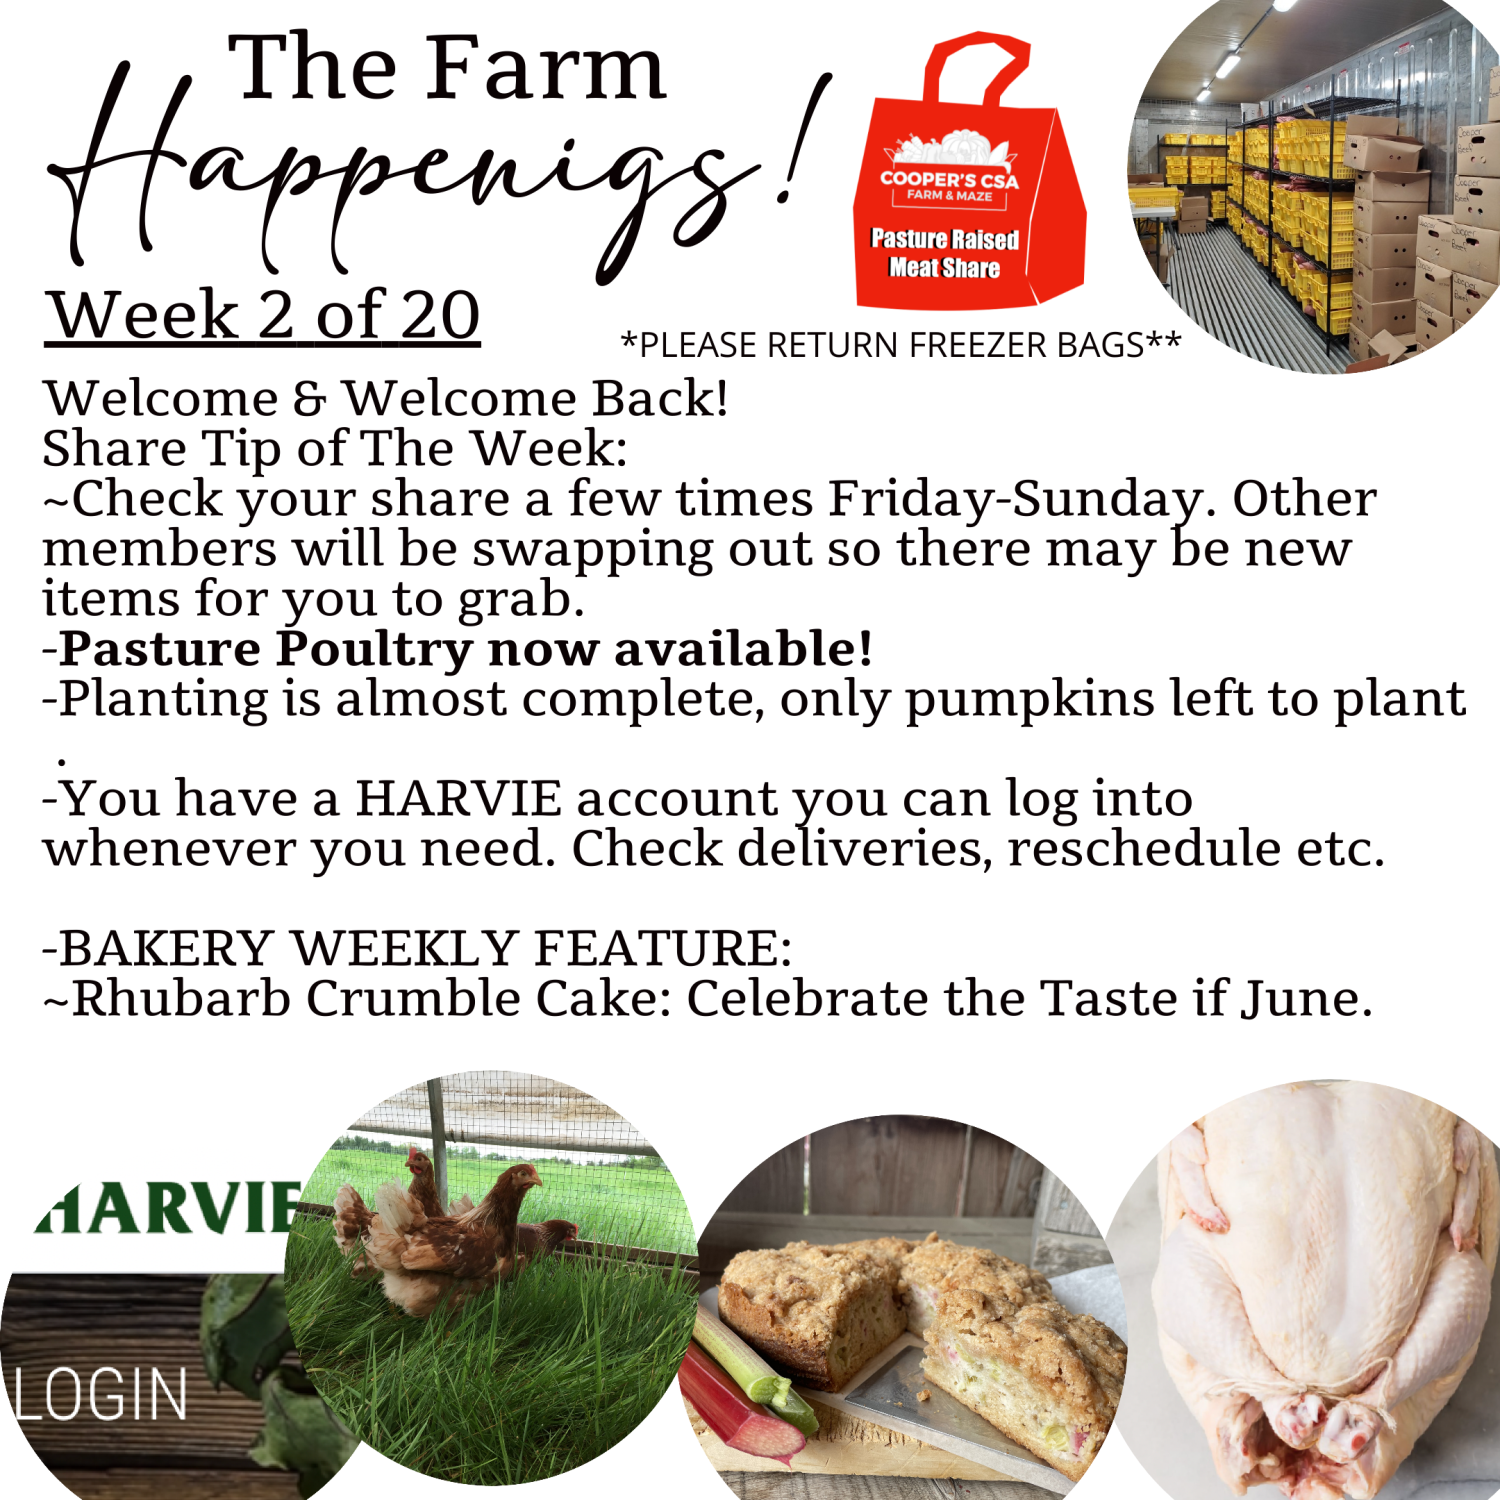 Next Happening: "Pasture Meat Shares"-Coopers CSA Farm Farm Happenings Week 2